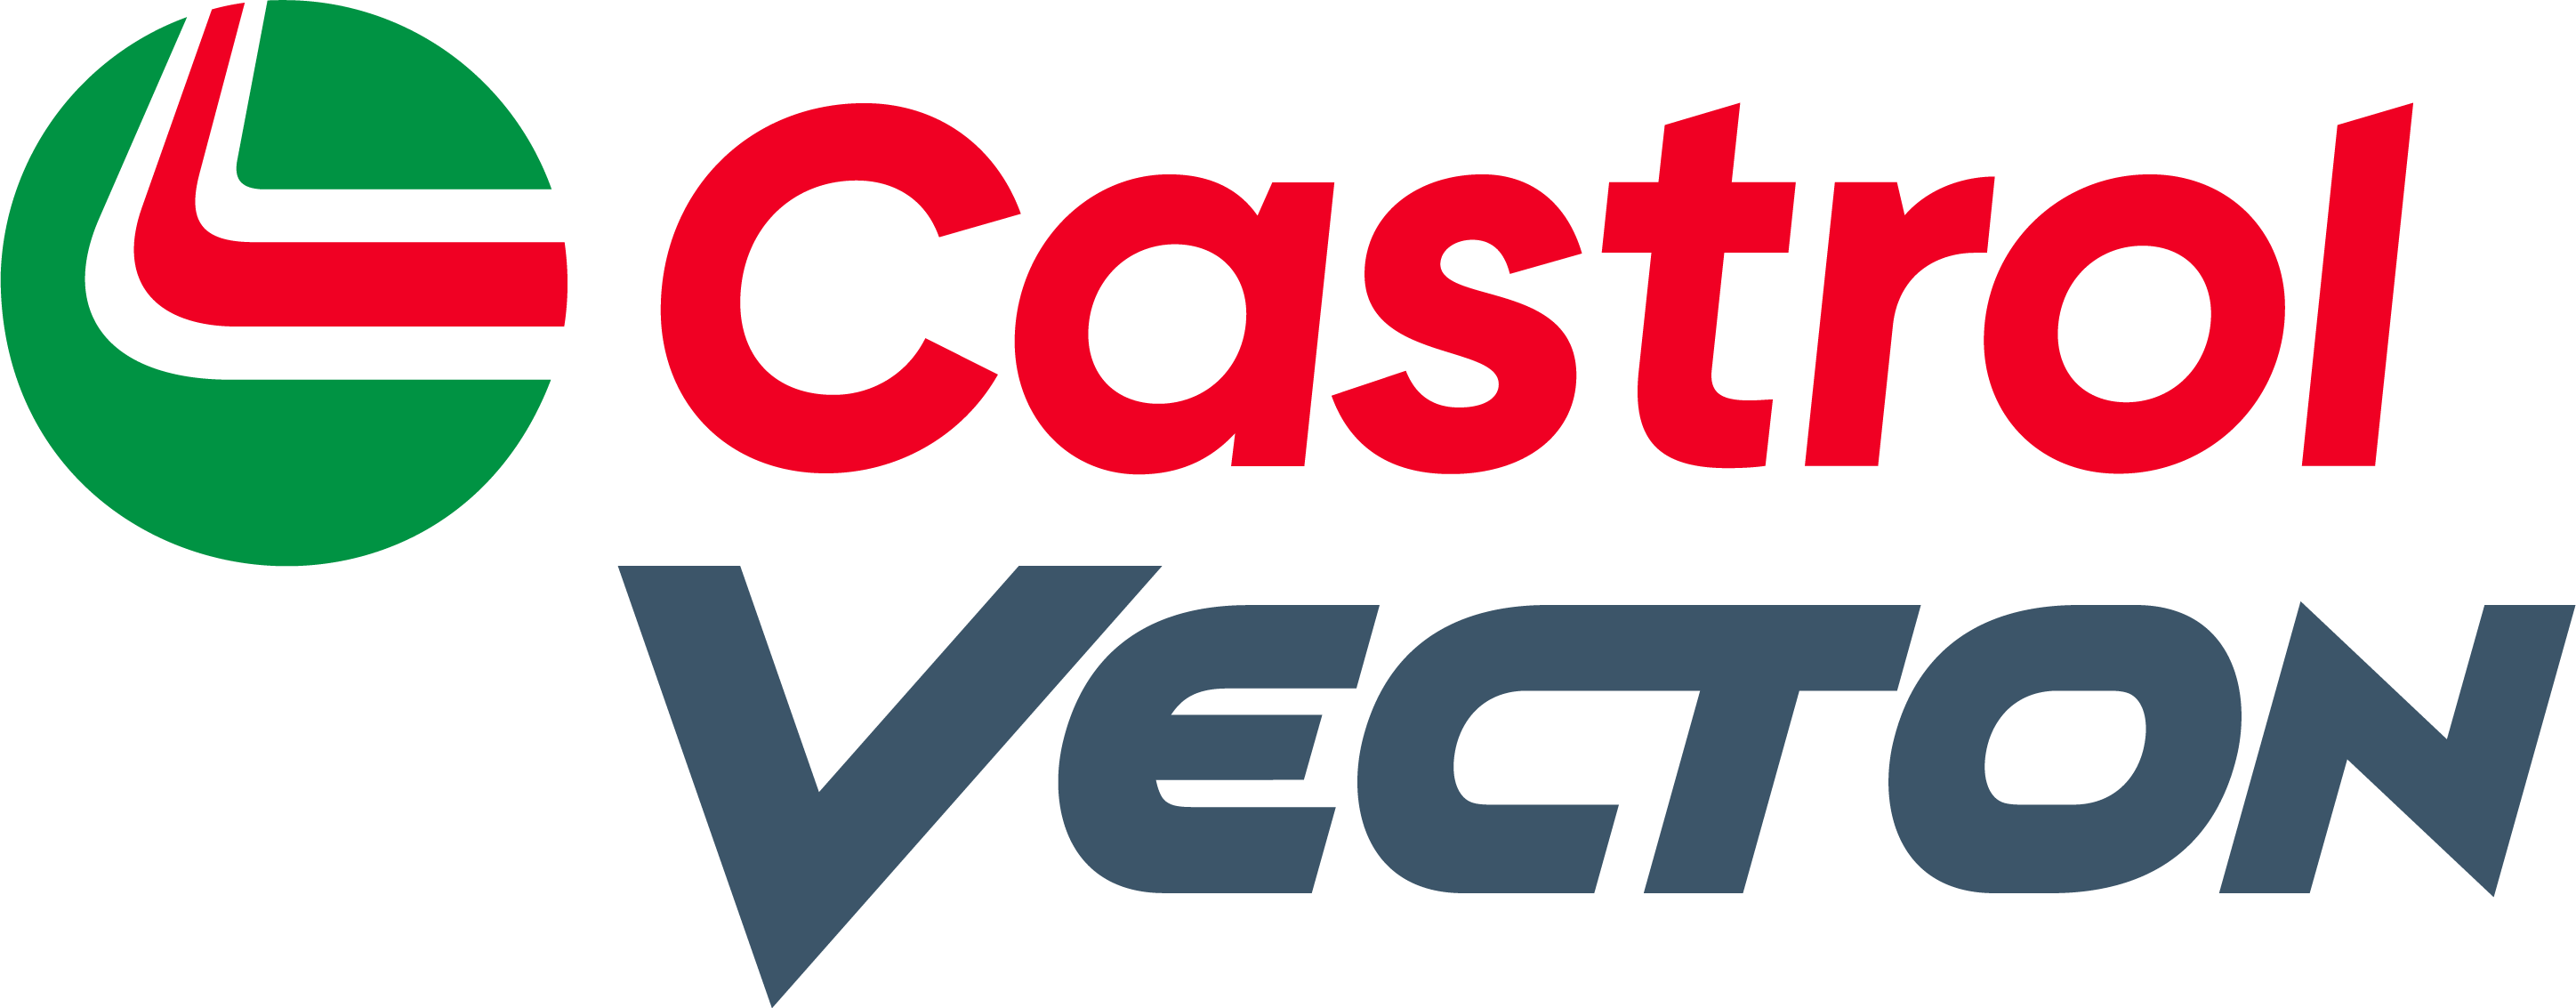 Castrol Vecton Sponsor